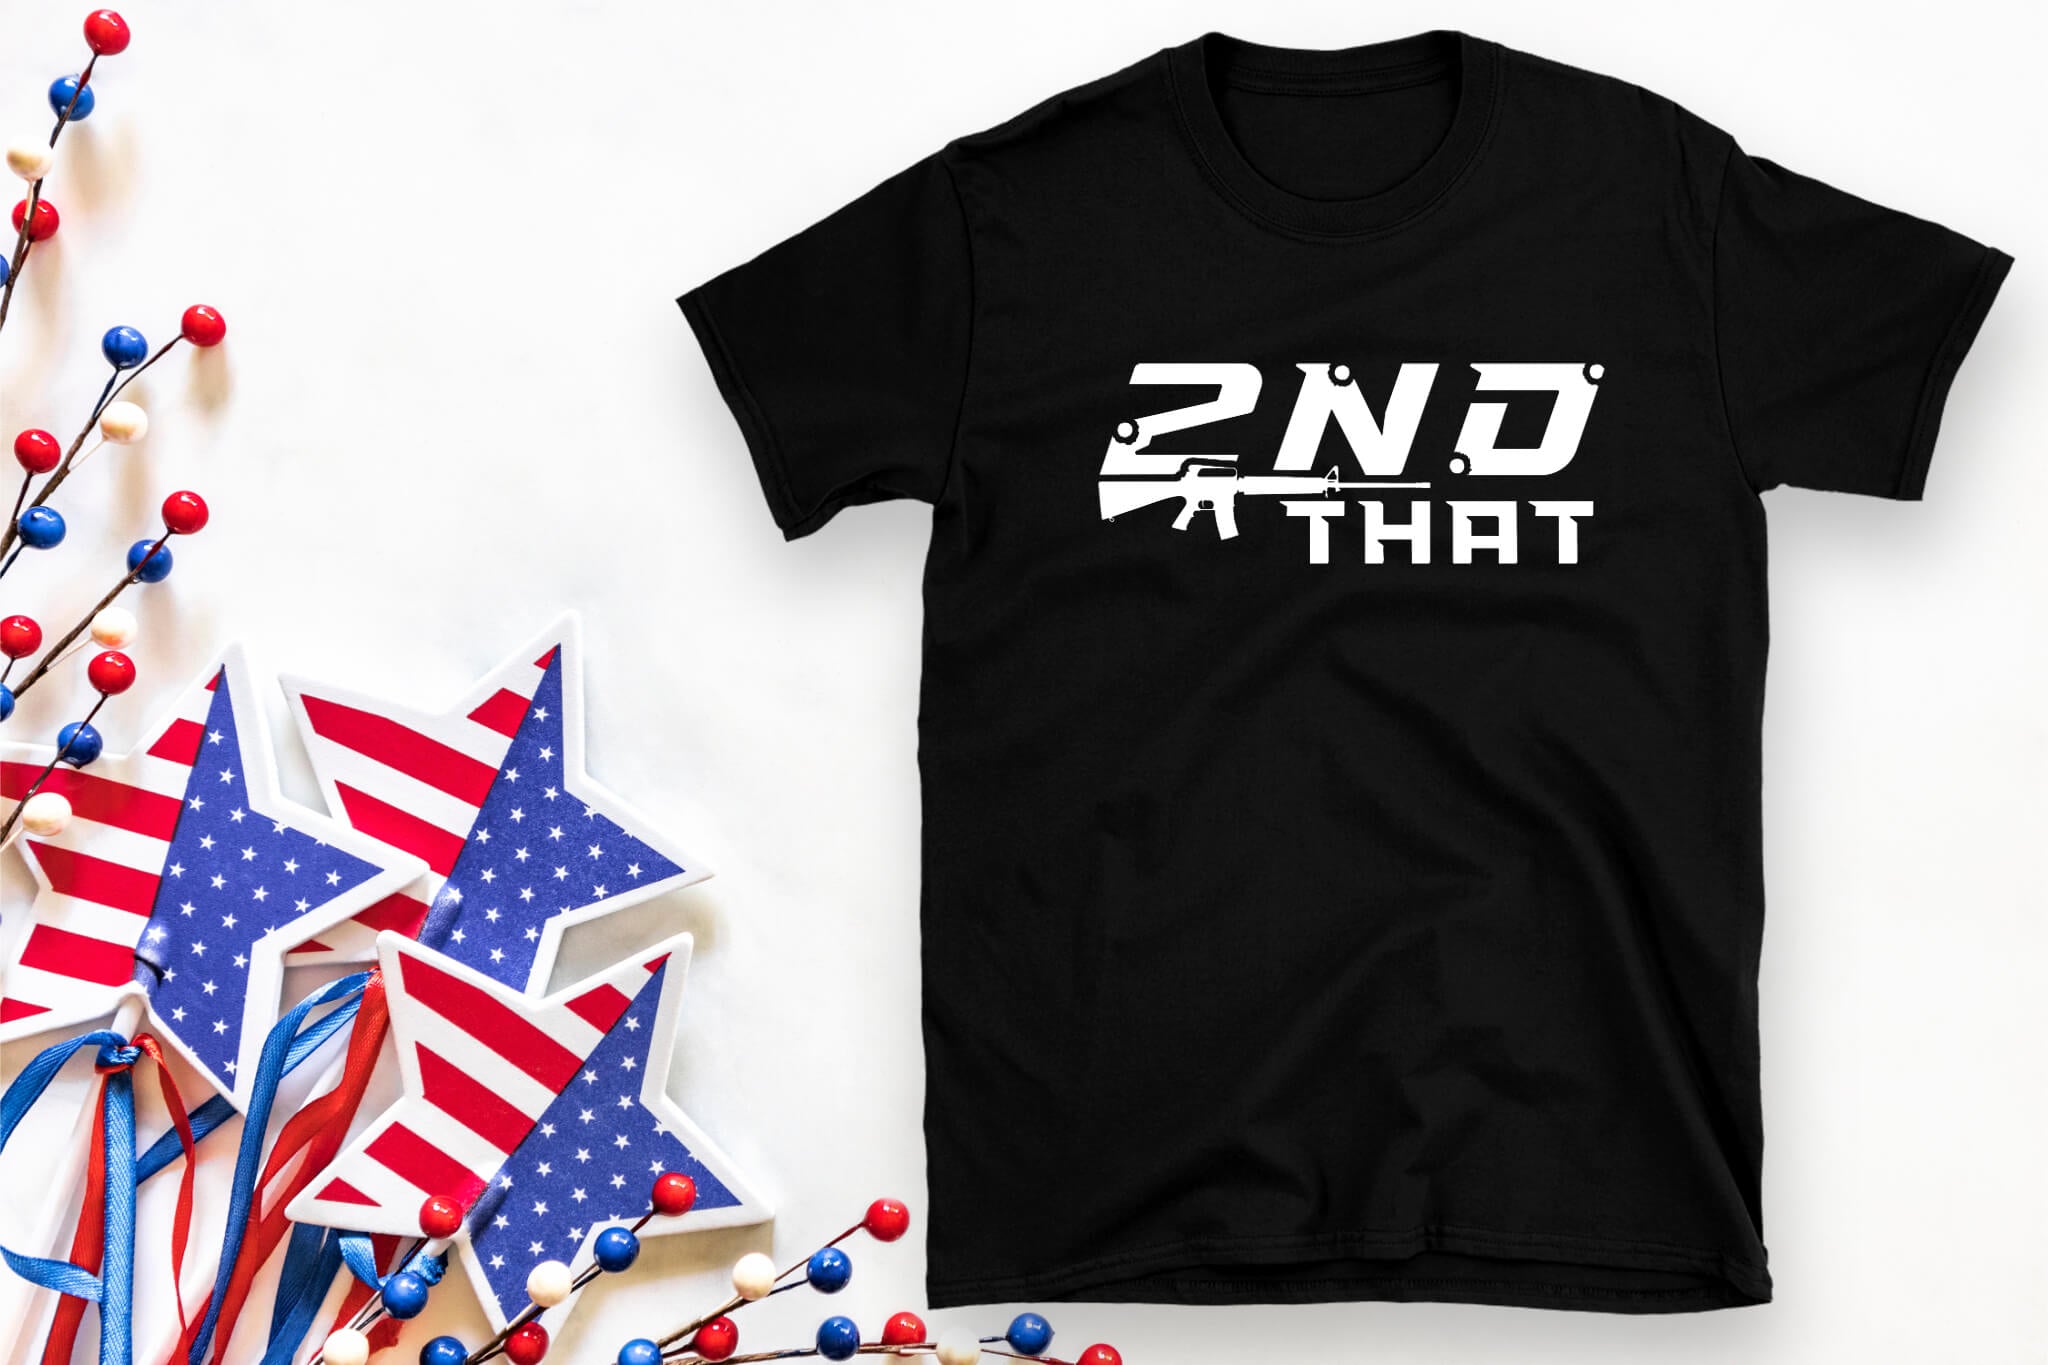 America Patriot - 2nd That AR-15 Unisex Men's Women's Graphic Print T-Shirt / Sweatshirt